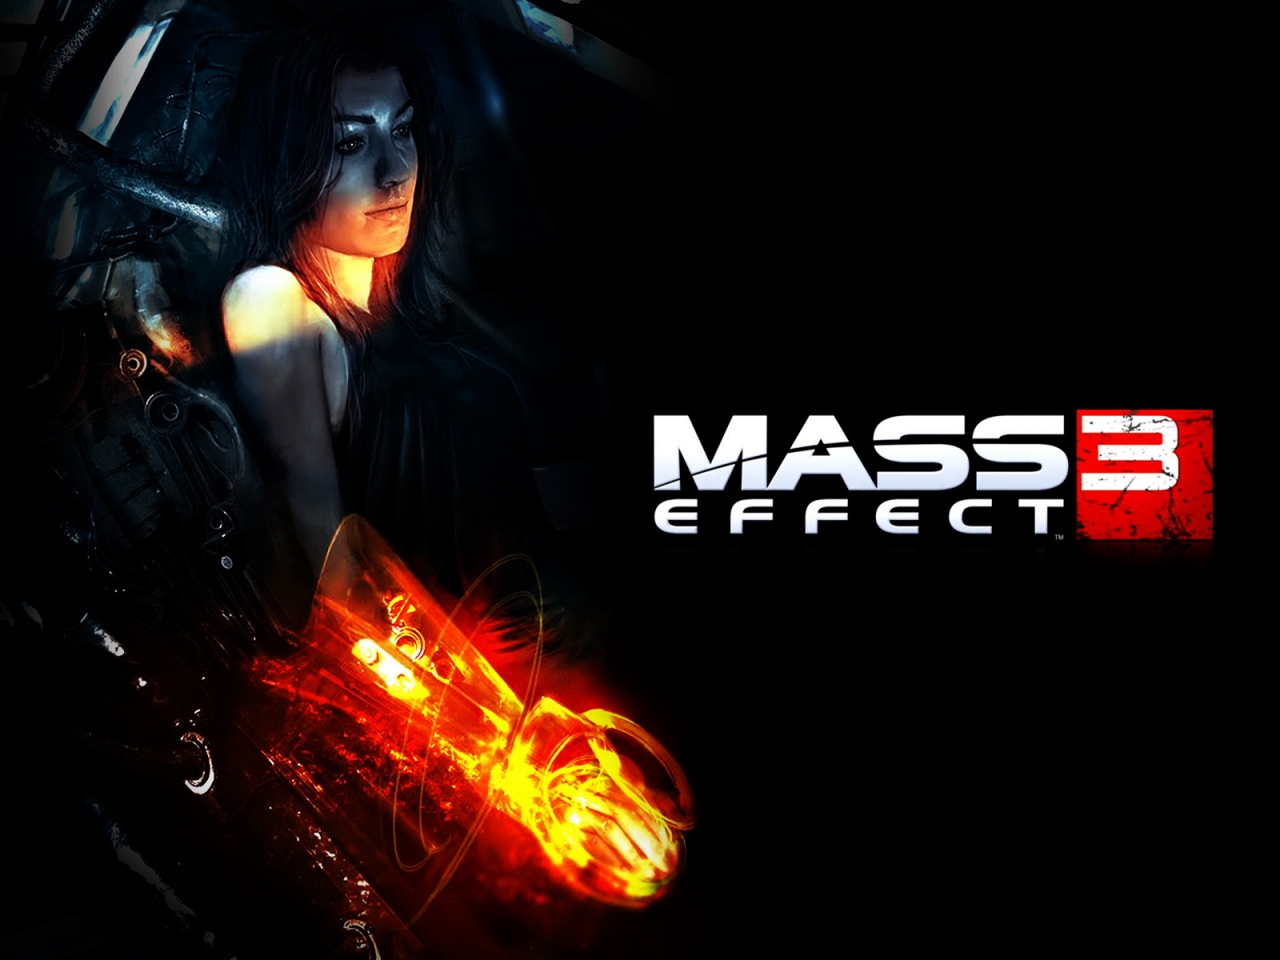 Miranda Mass Effect 3 for 1280 x 960 resolution